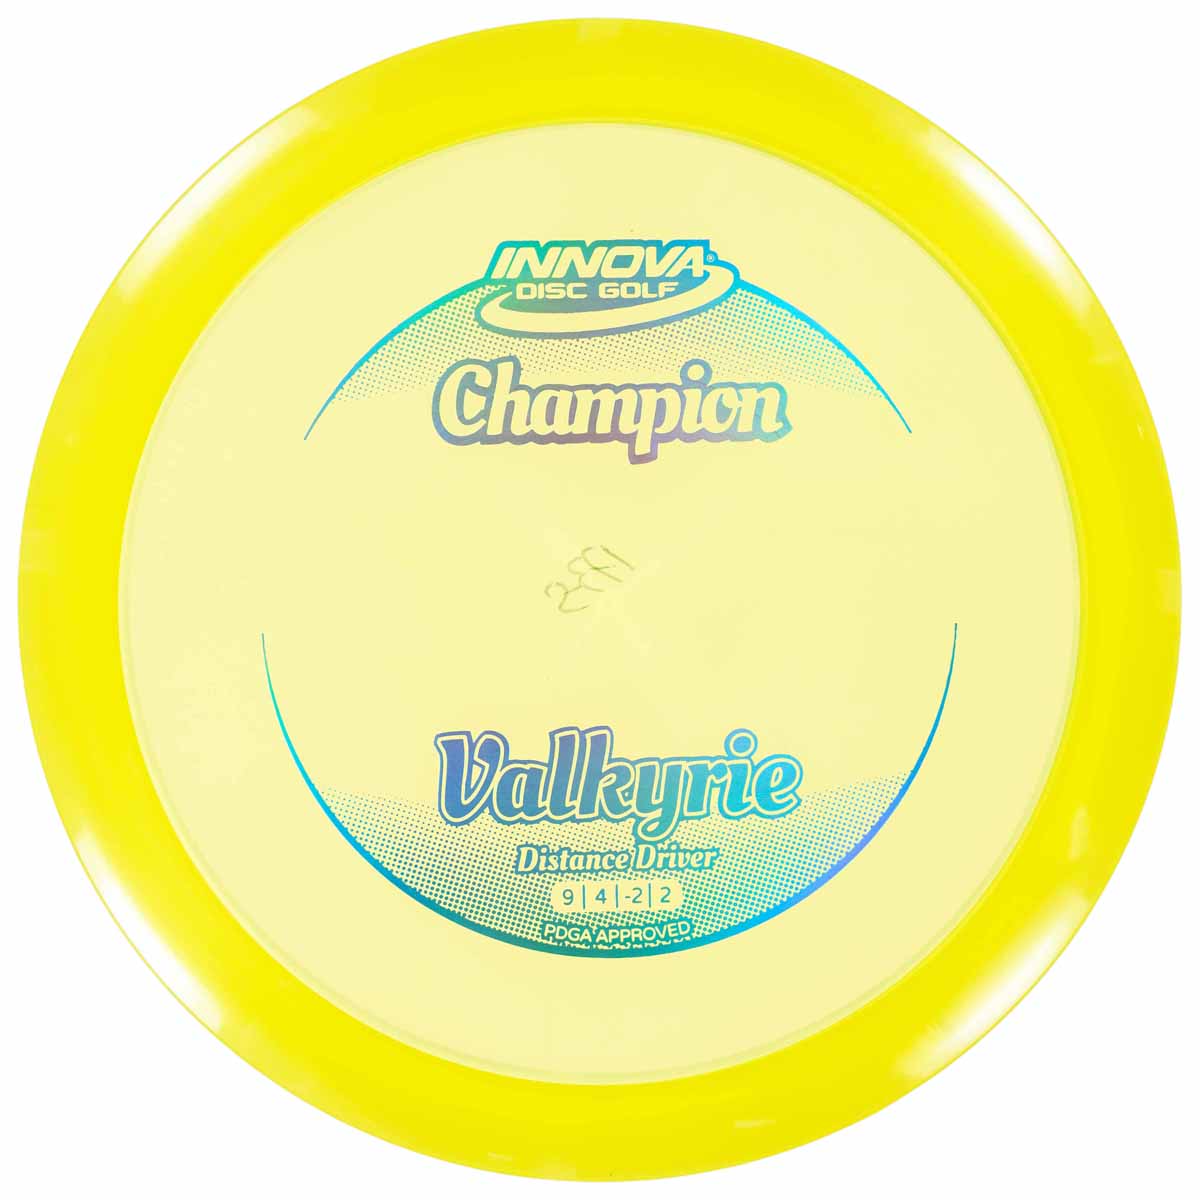 Innova Champion Valkyrie. Yellow color.